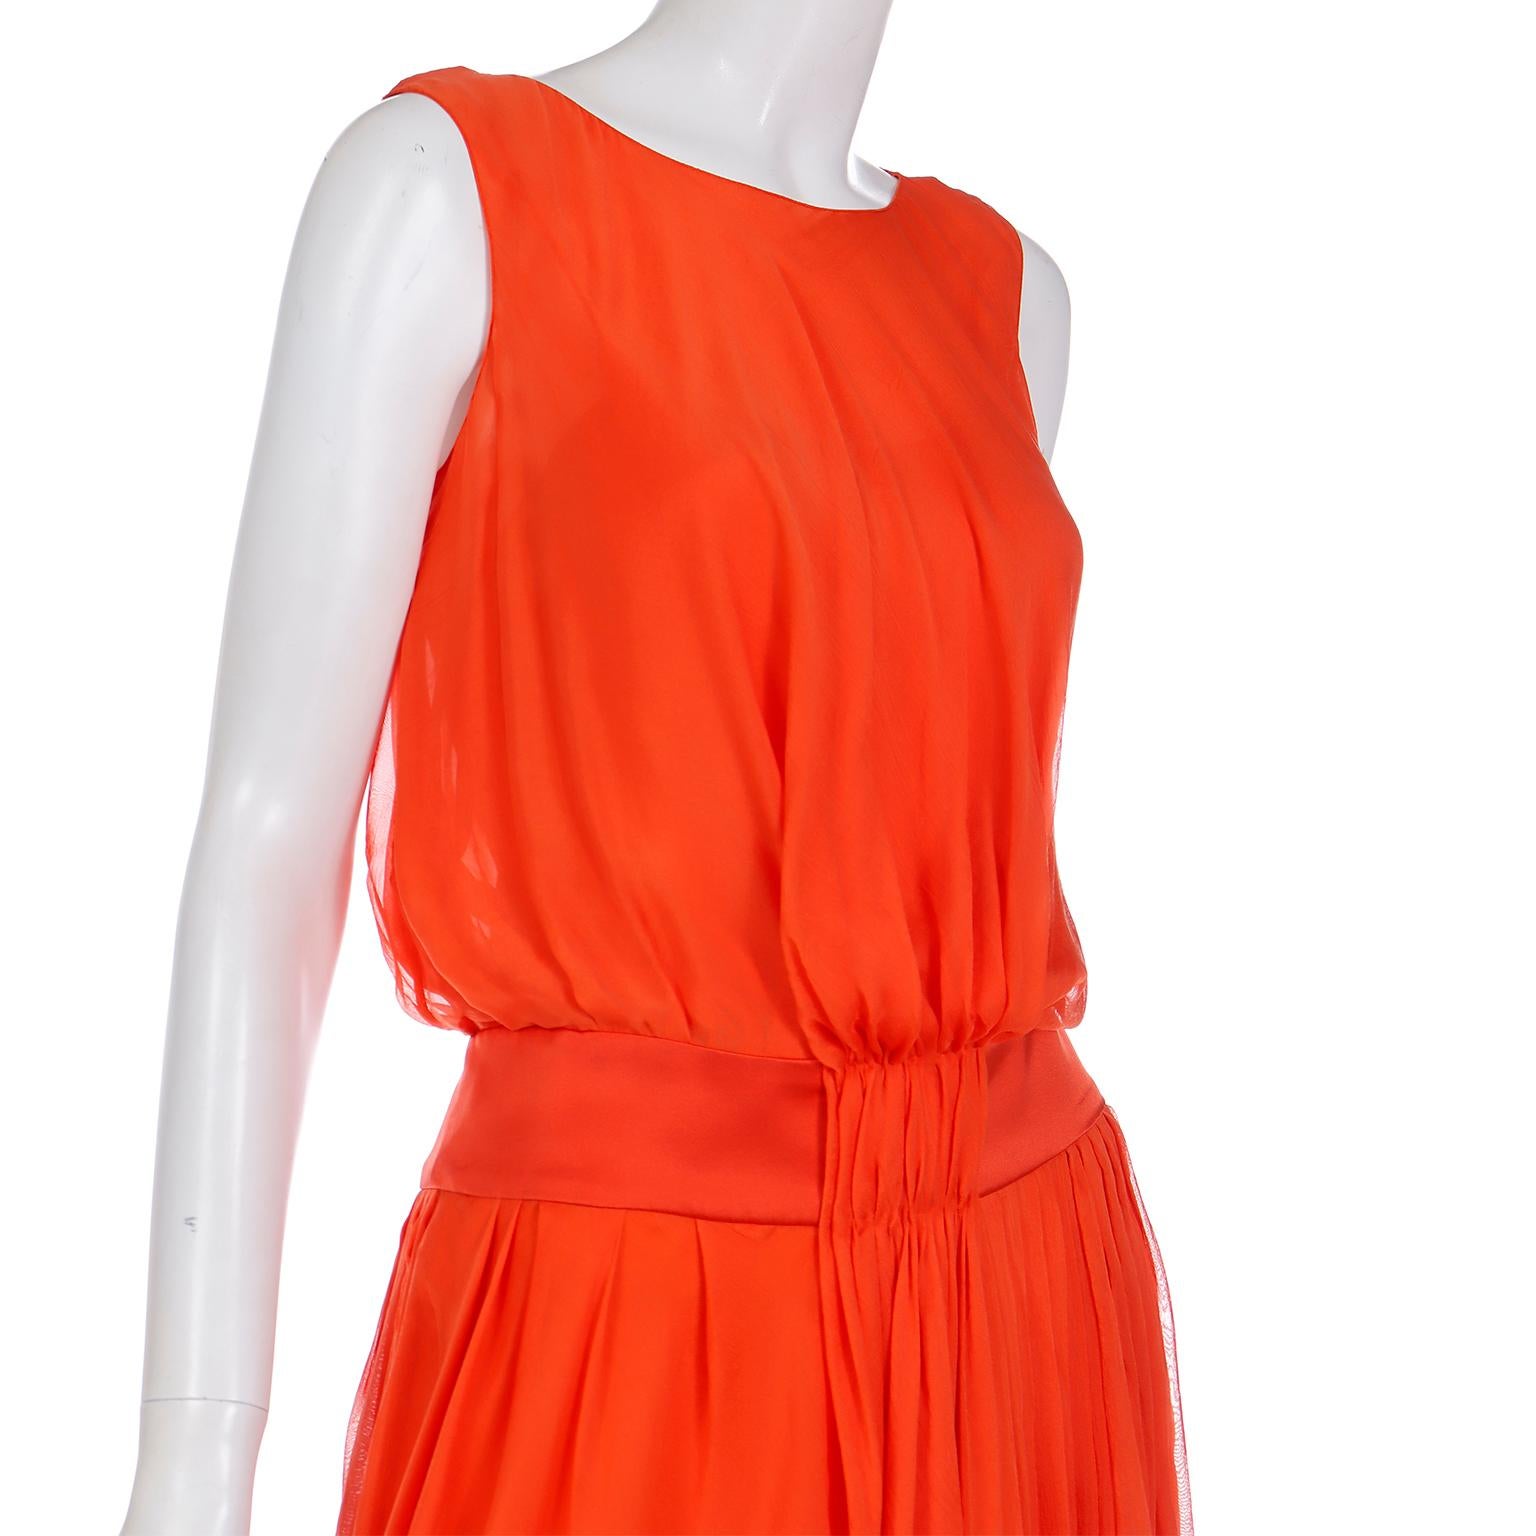 Vintage Fine Silk Chiffon Orange Sleeveless Dress With Satin Waistband For Sale 2